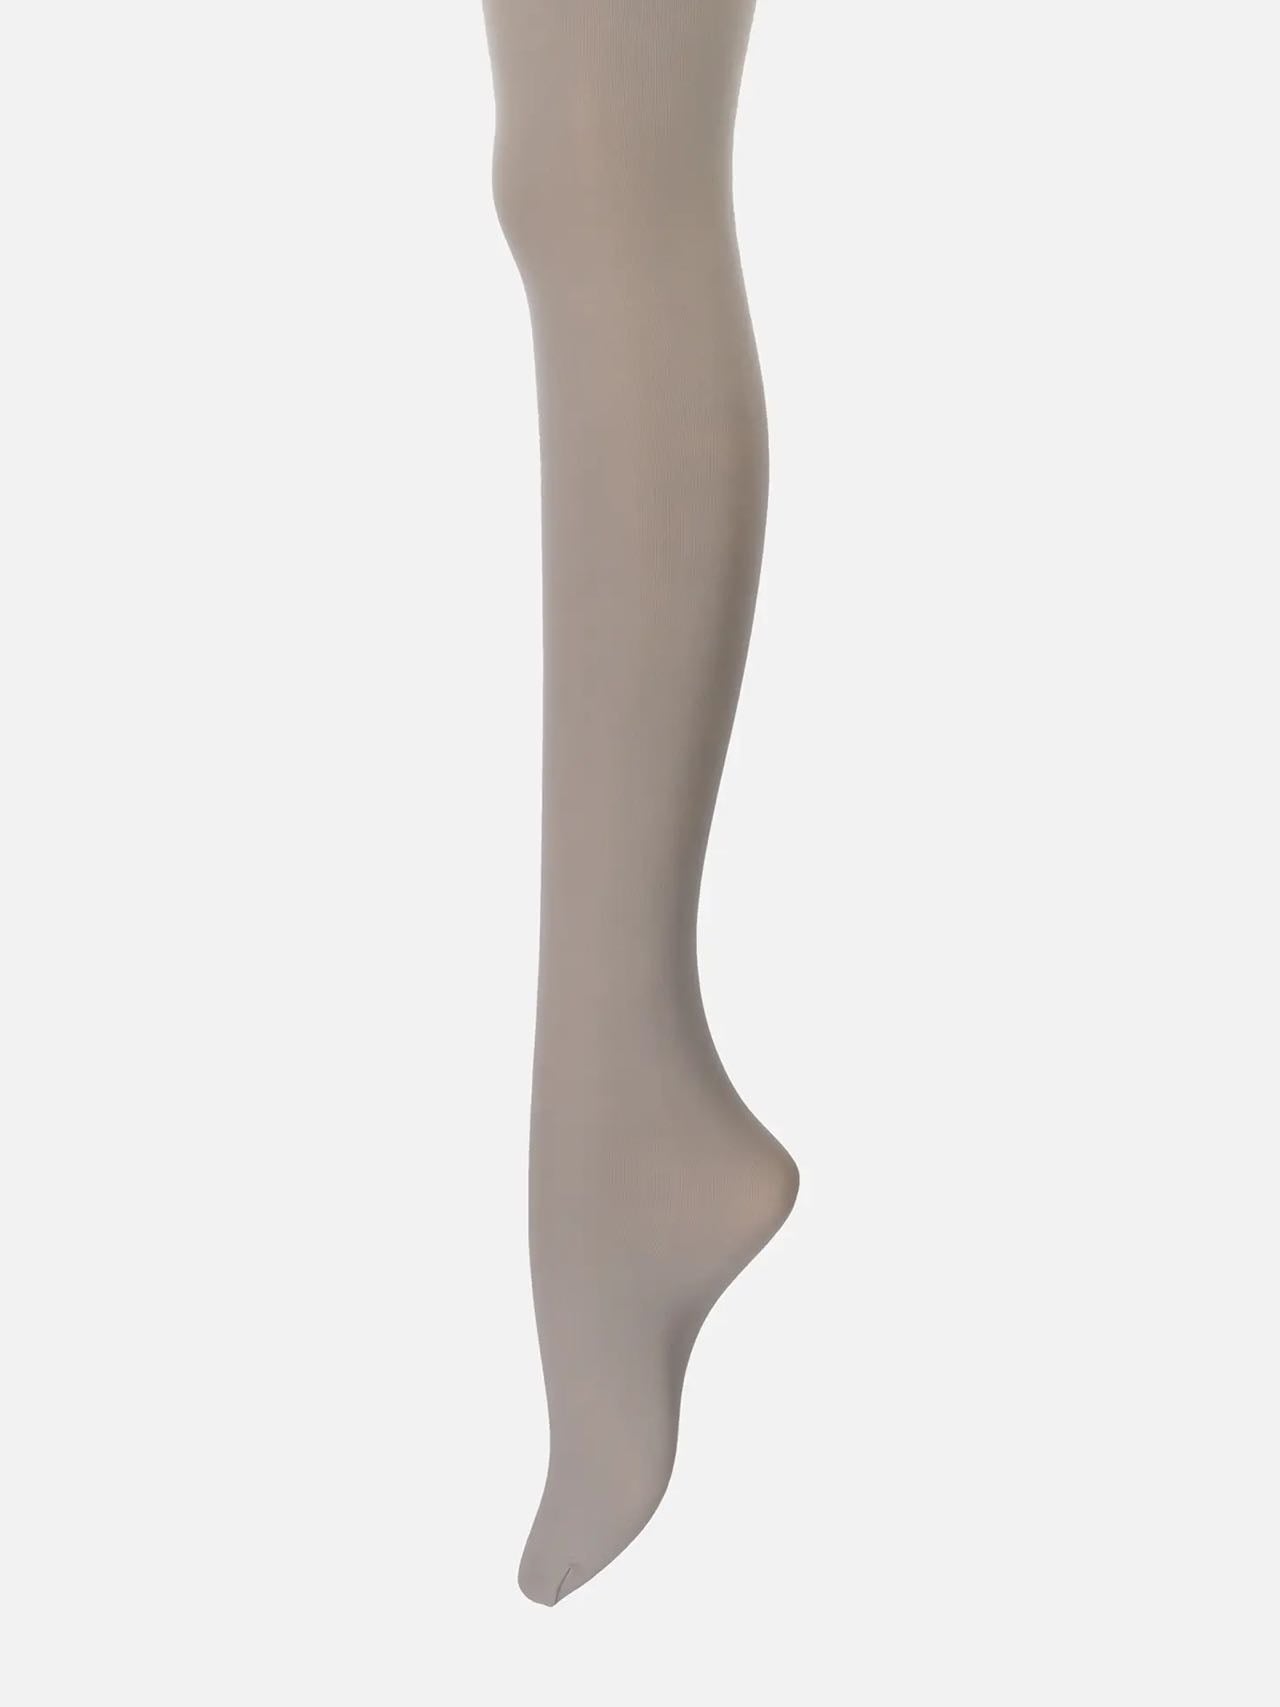 Japan Tabio 60D Premium Feeling Pure Color Pantyhose, Stockings, Multicolor Available